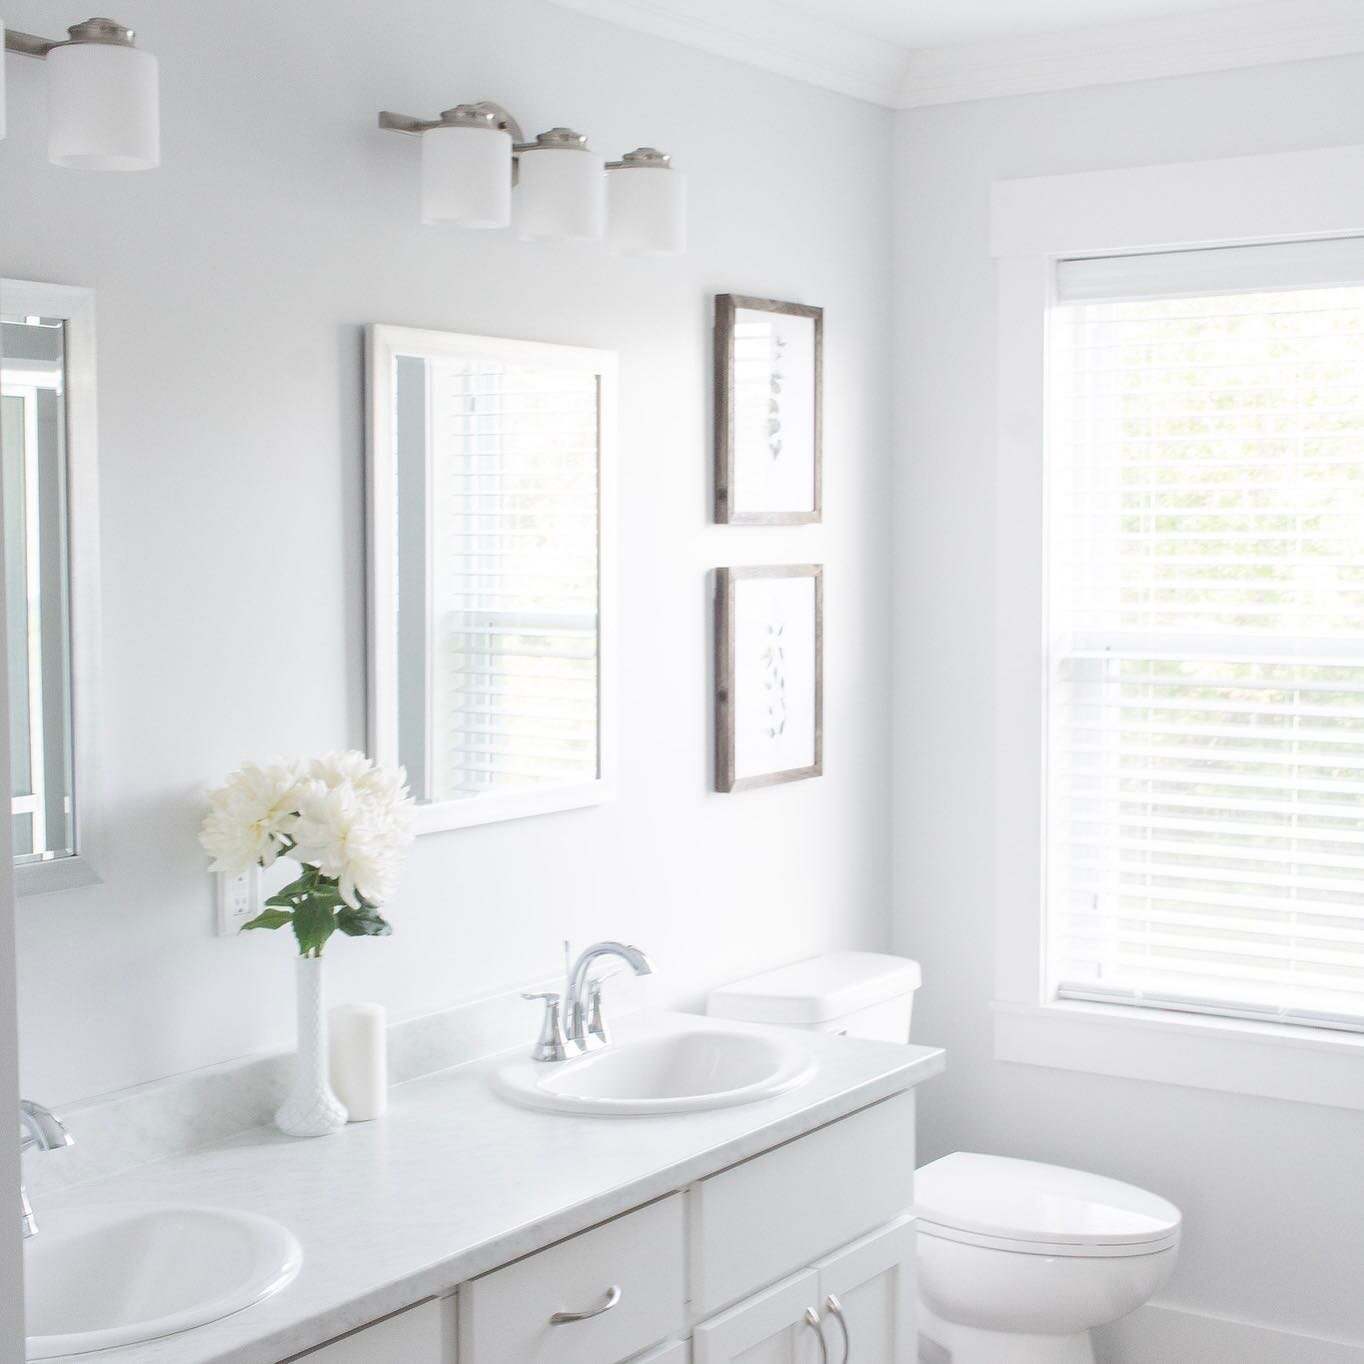 Who doesn&rsquo;t love a bright white bathroom!? 😍 

#bathroominspo #whitebathroom #lightandbright #allwhiteeverything #design #interiorstyle #bathroomsofinstagram #bathroomgoals